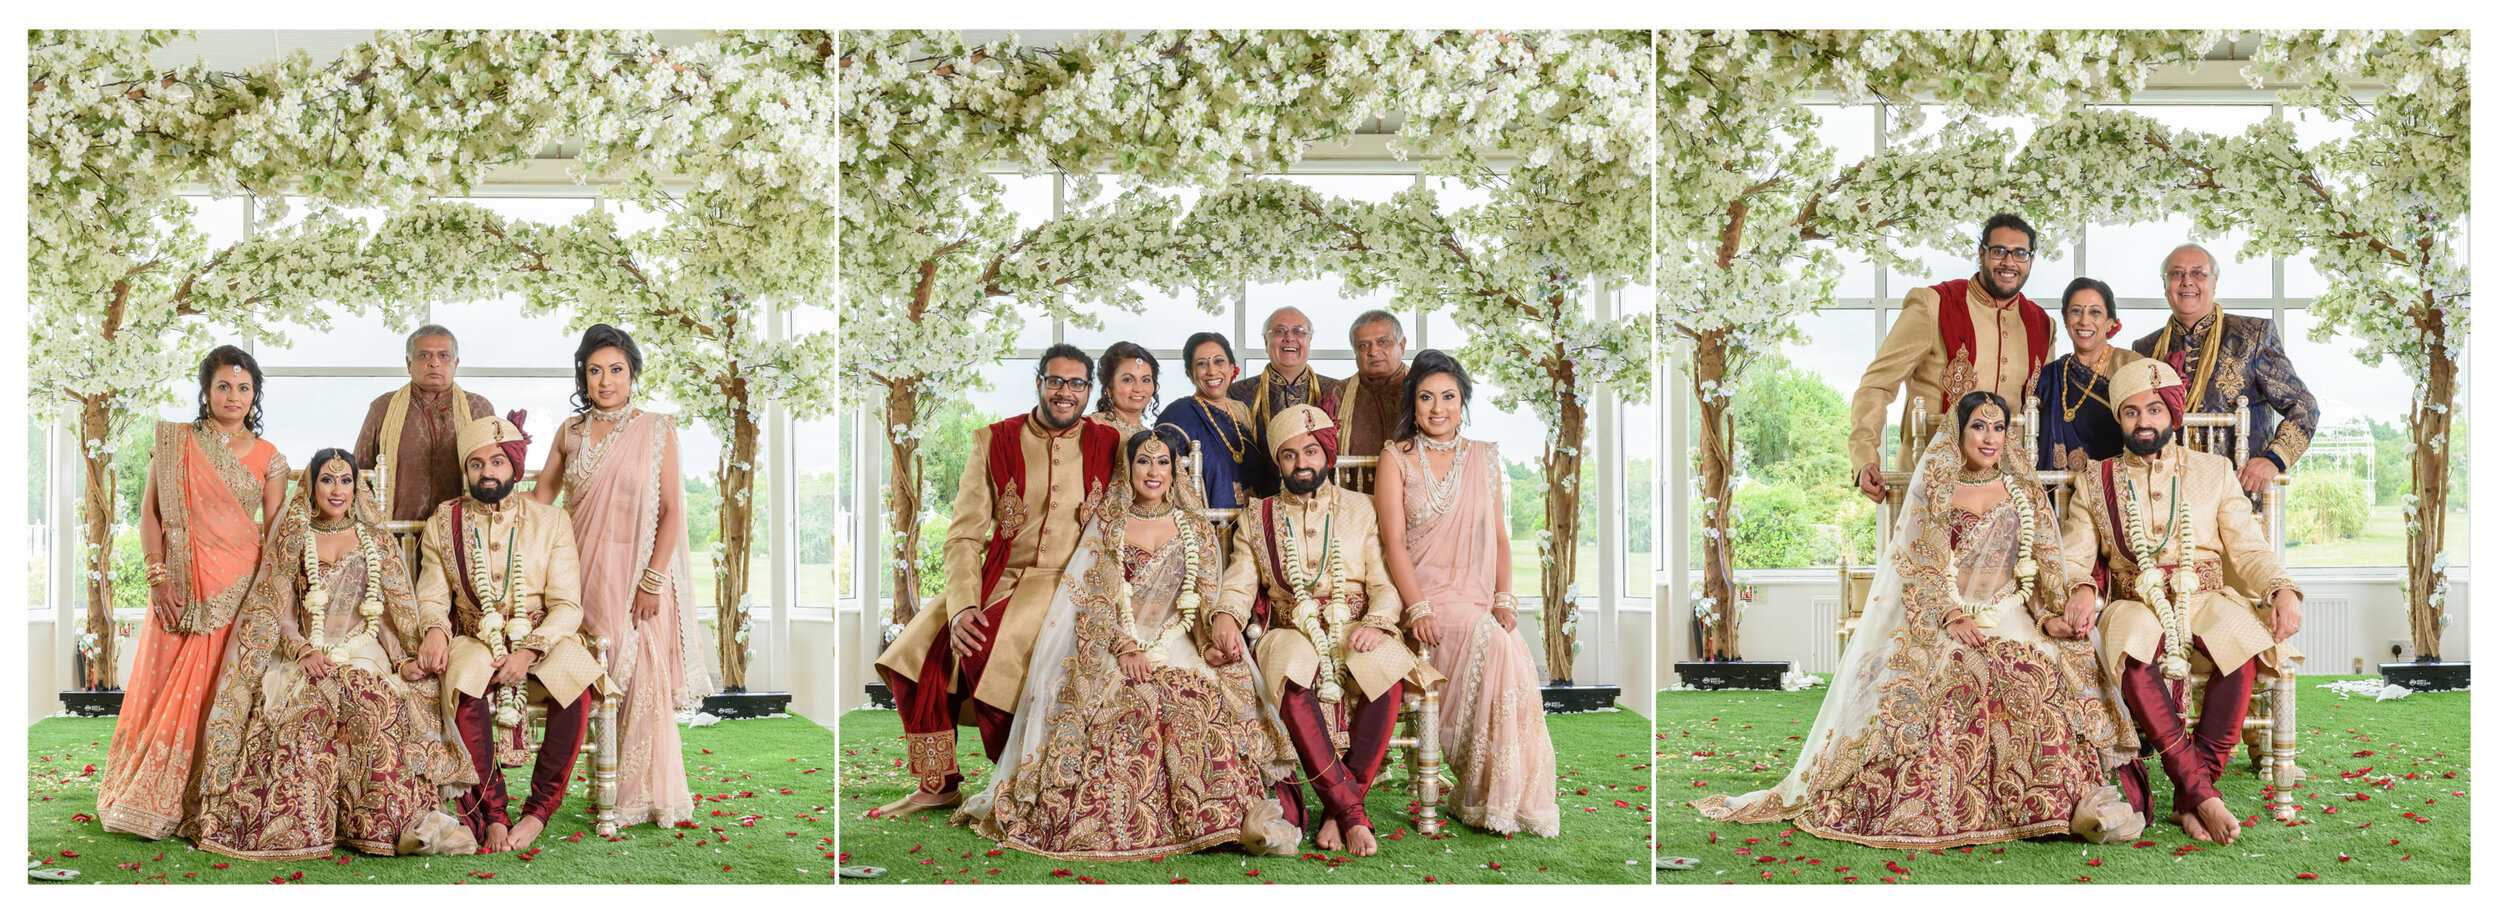 satnam photography luxury hindu wedding album -35.jpg